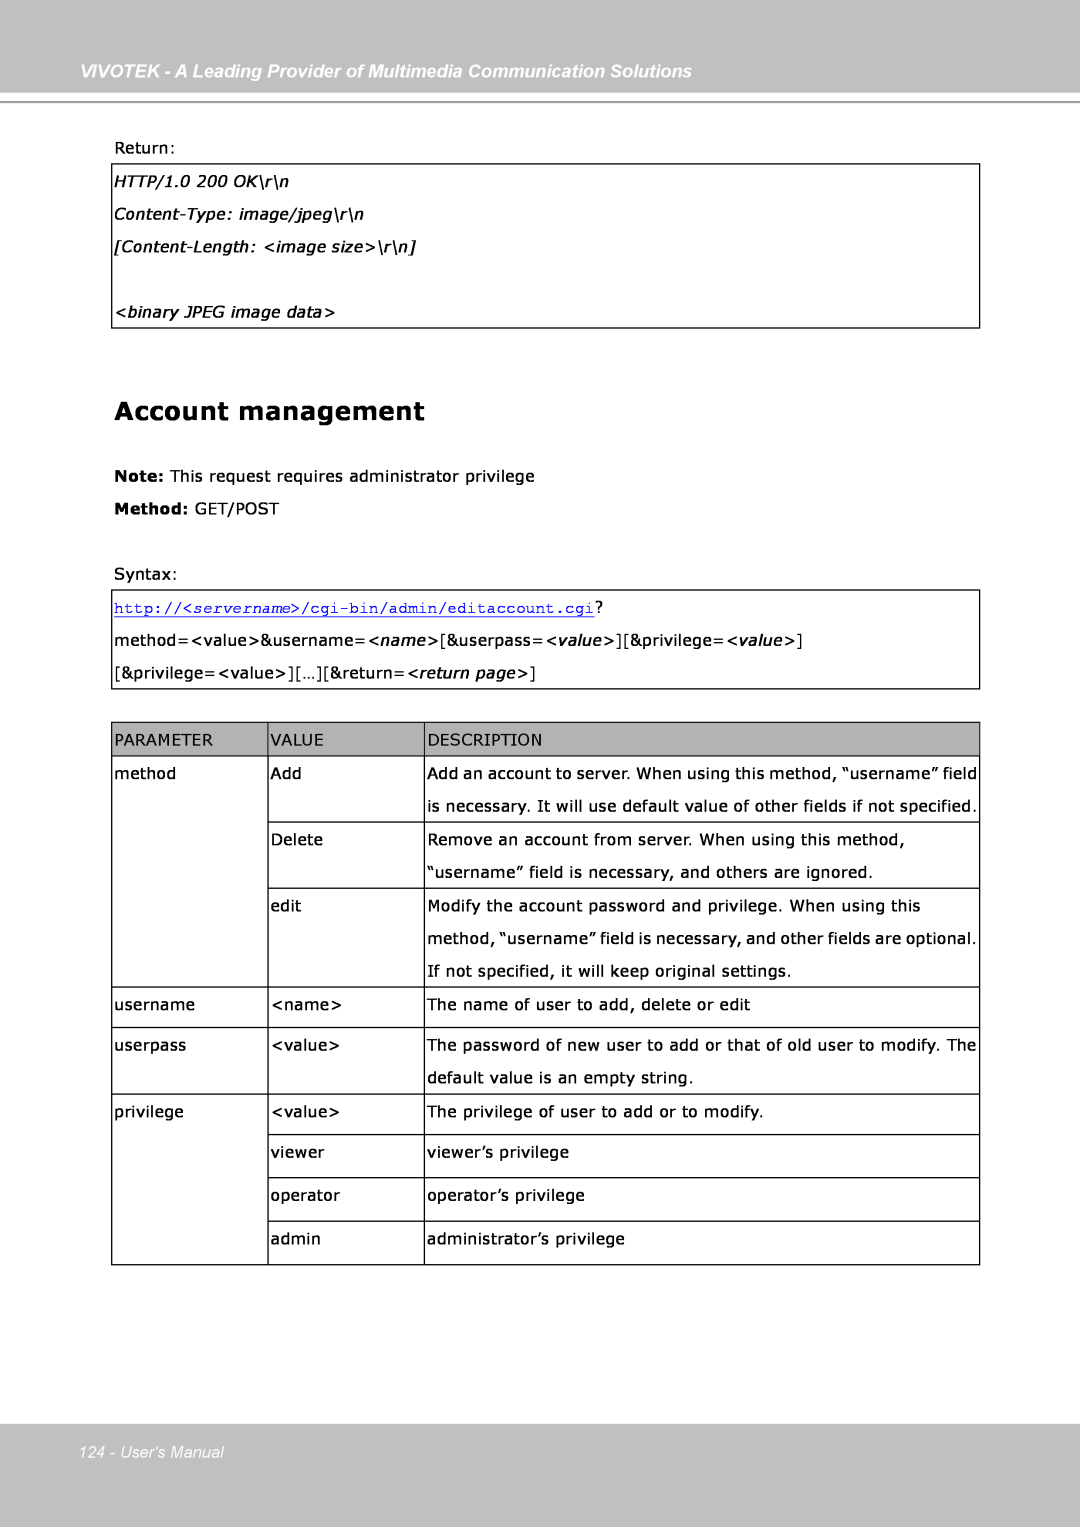 Vivotek FD7141(V) manual Account management, <binary JPEG image data>, Method: GET/POST, Users Manual 